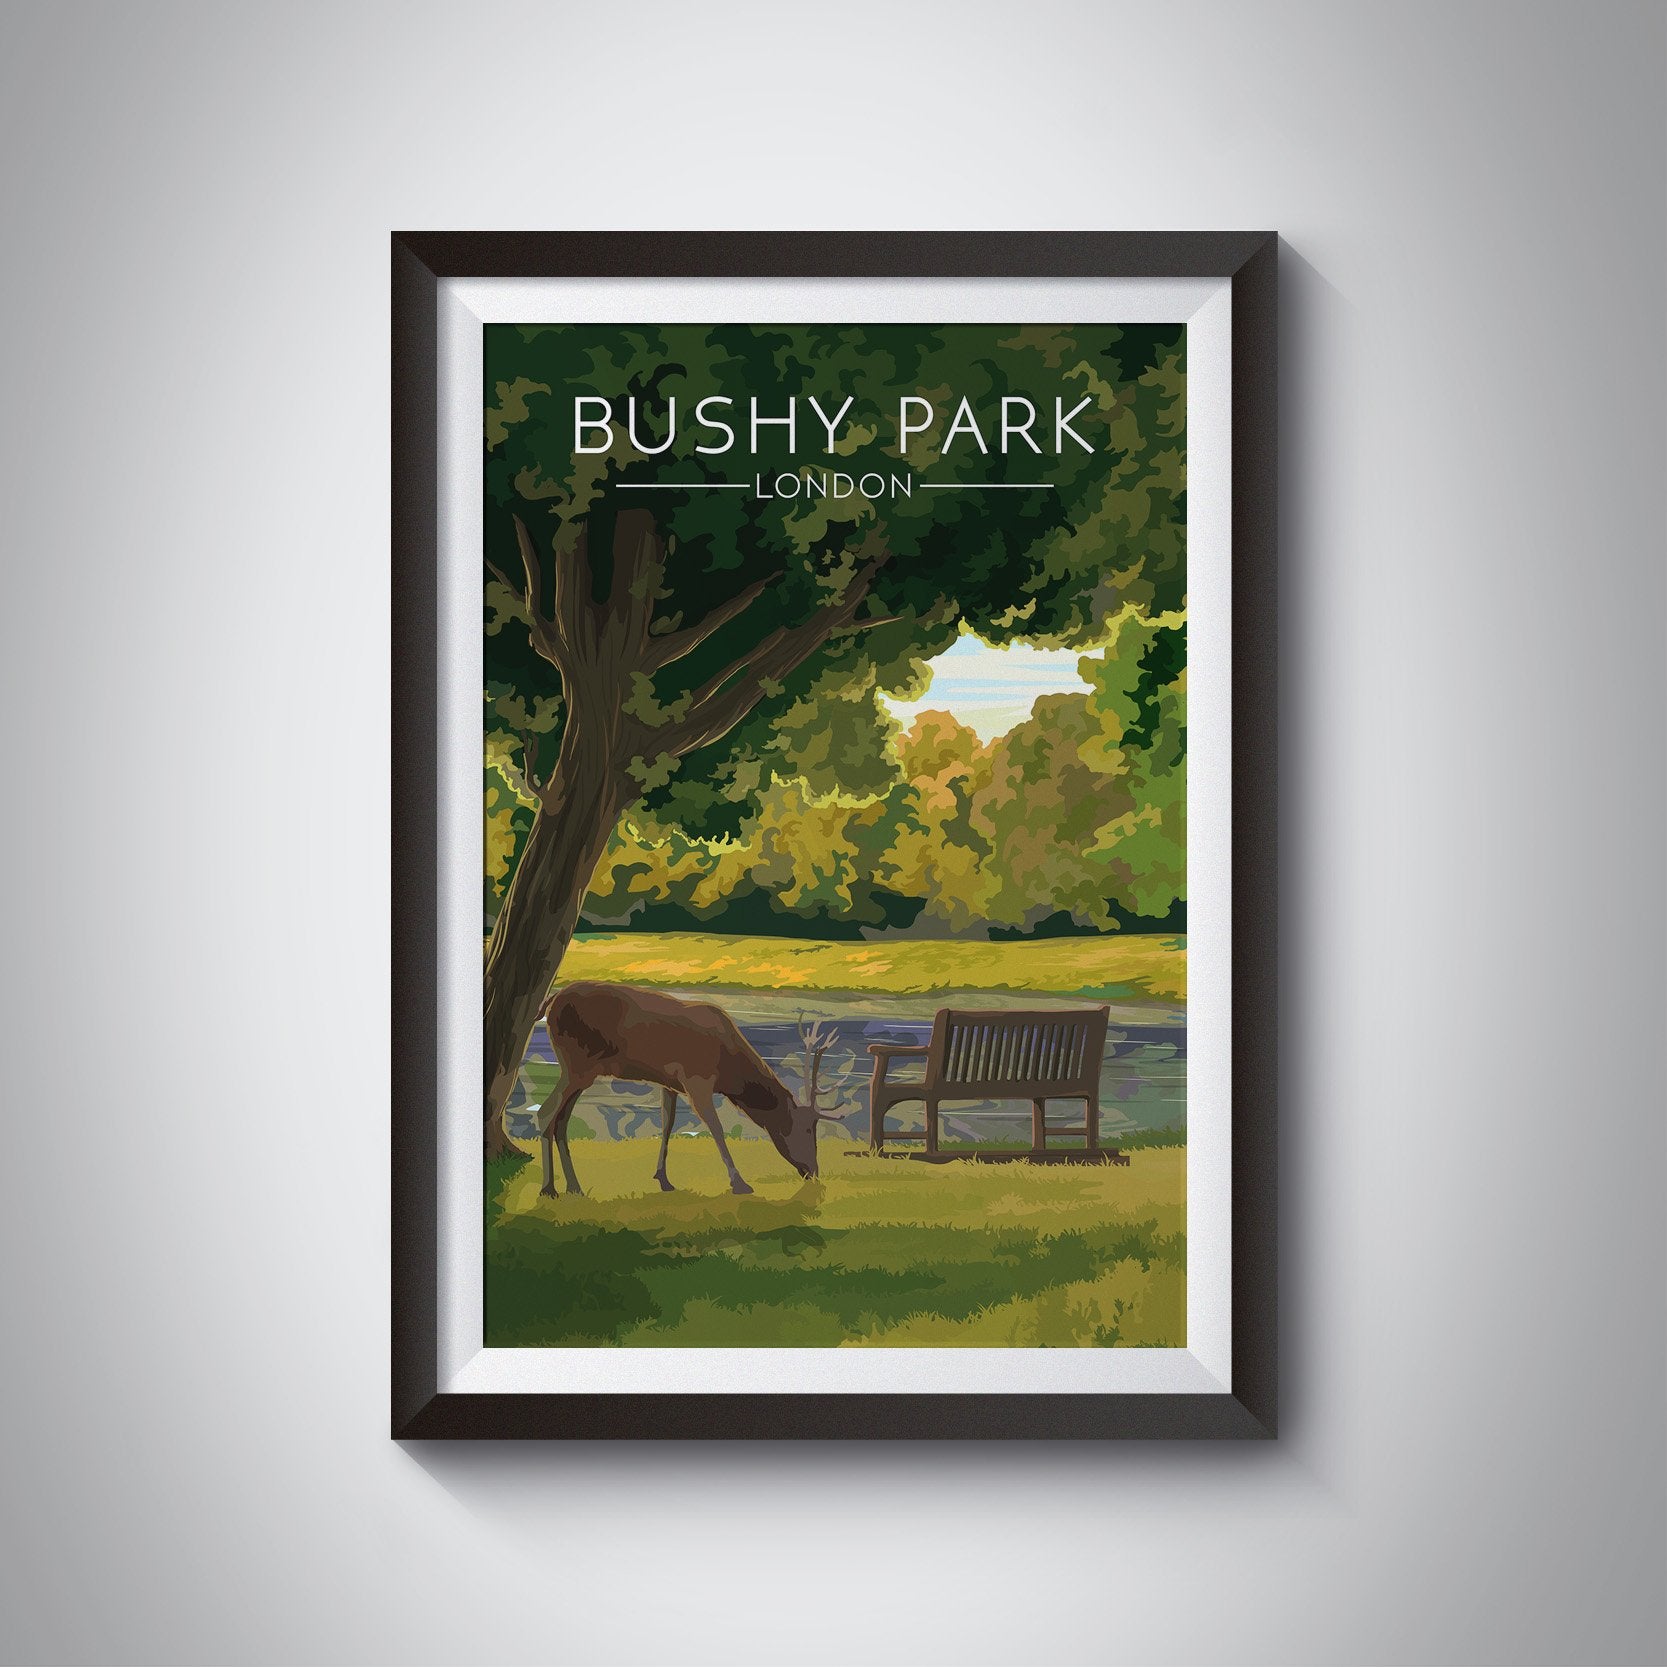 Bushy Park London Travel Poster